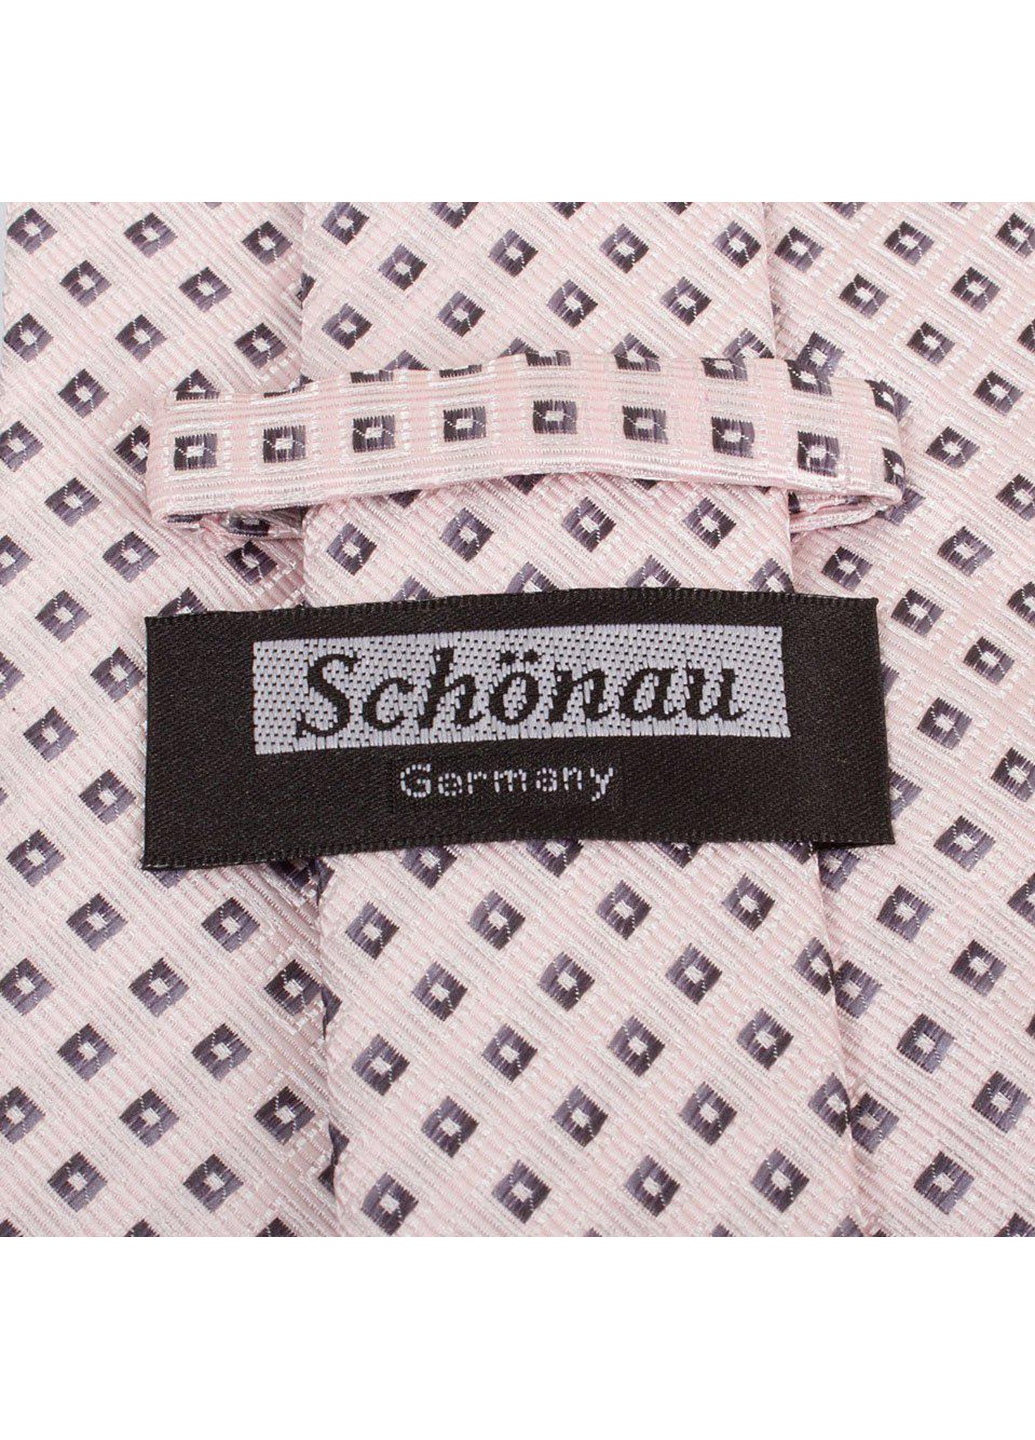 Мужской галстук 146,5 см Schonau & Houcken (252131828)